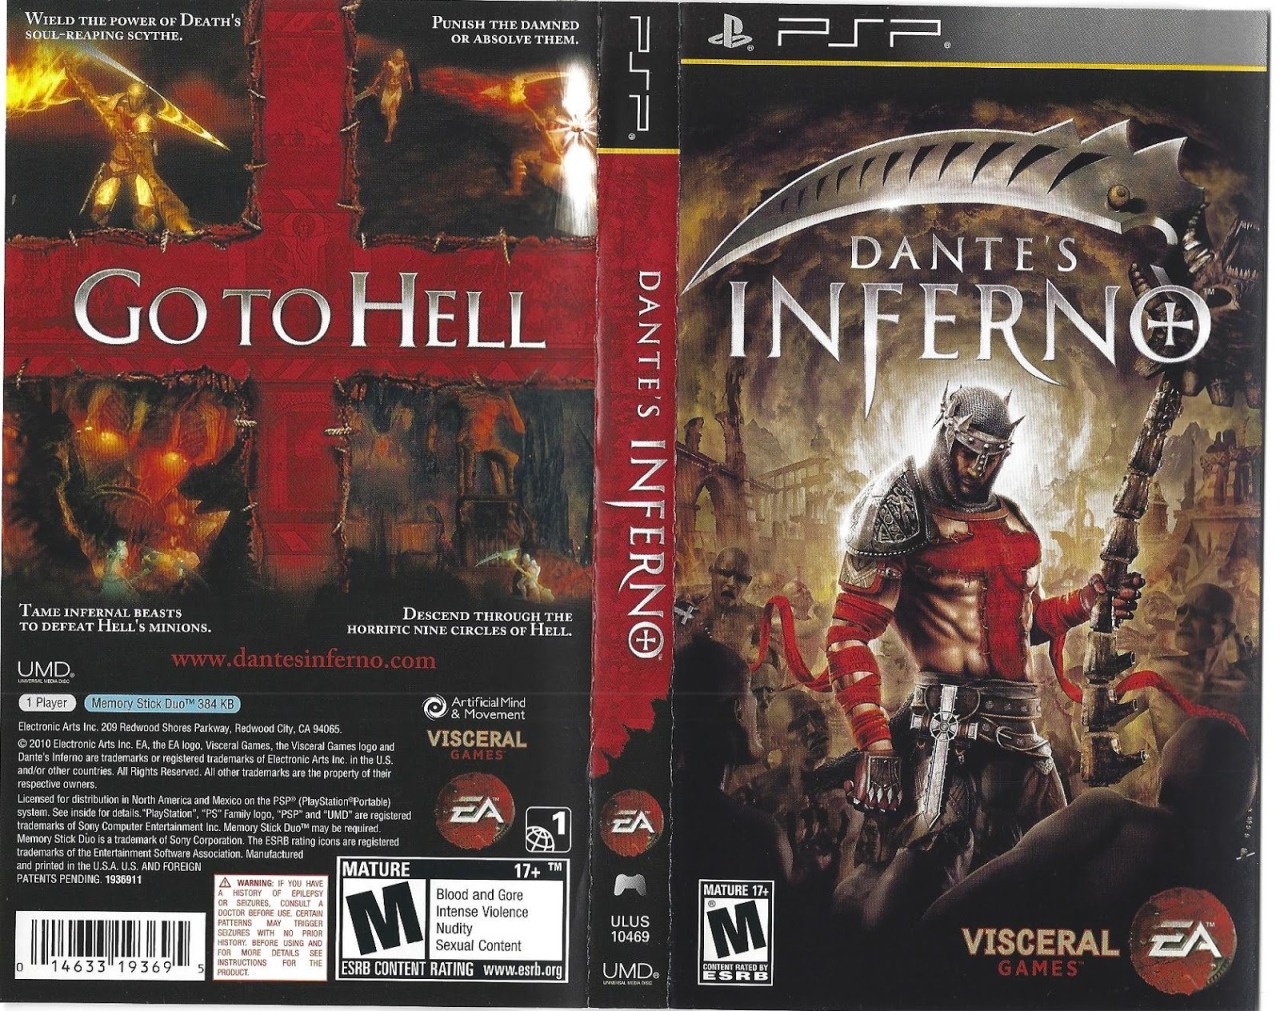 Dante's Inferno, PSP